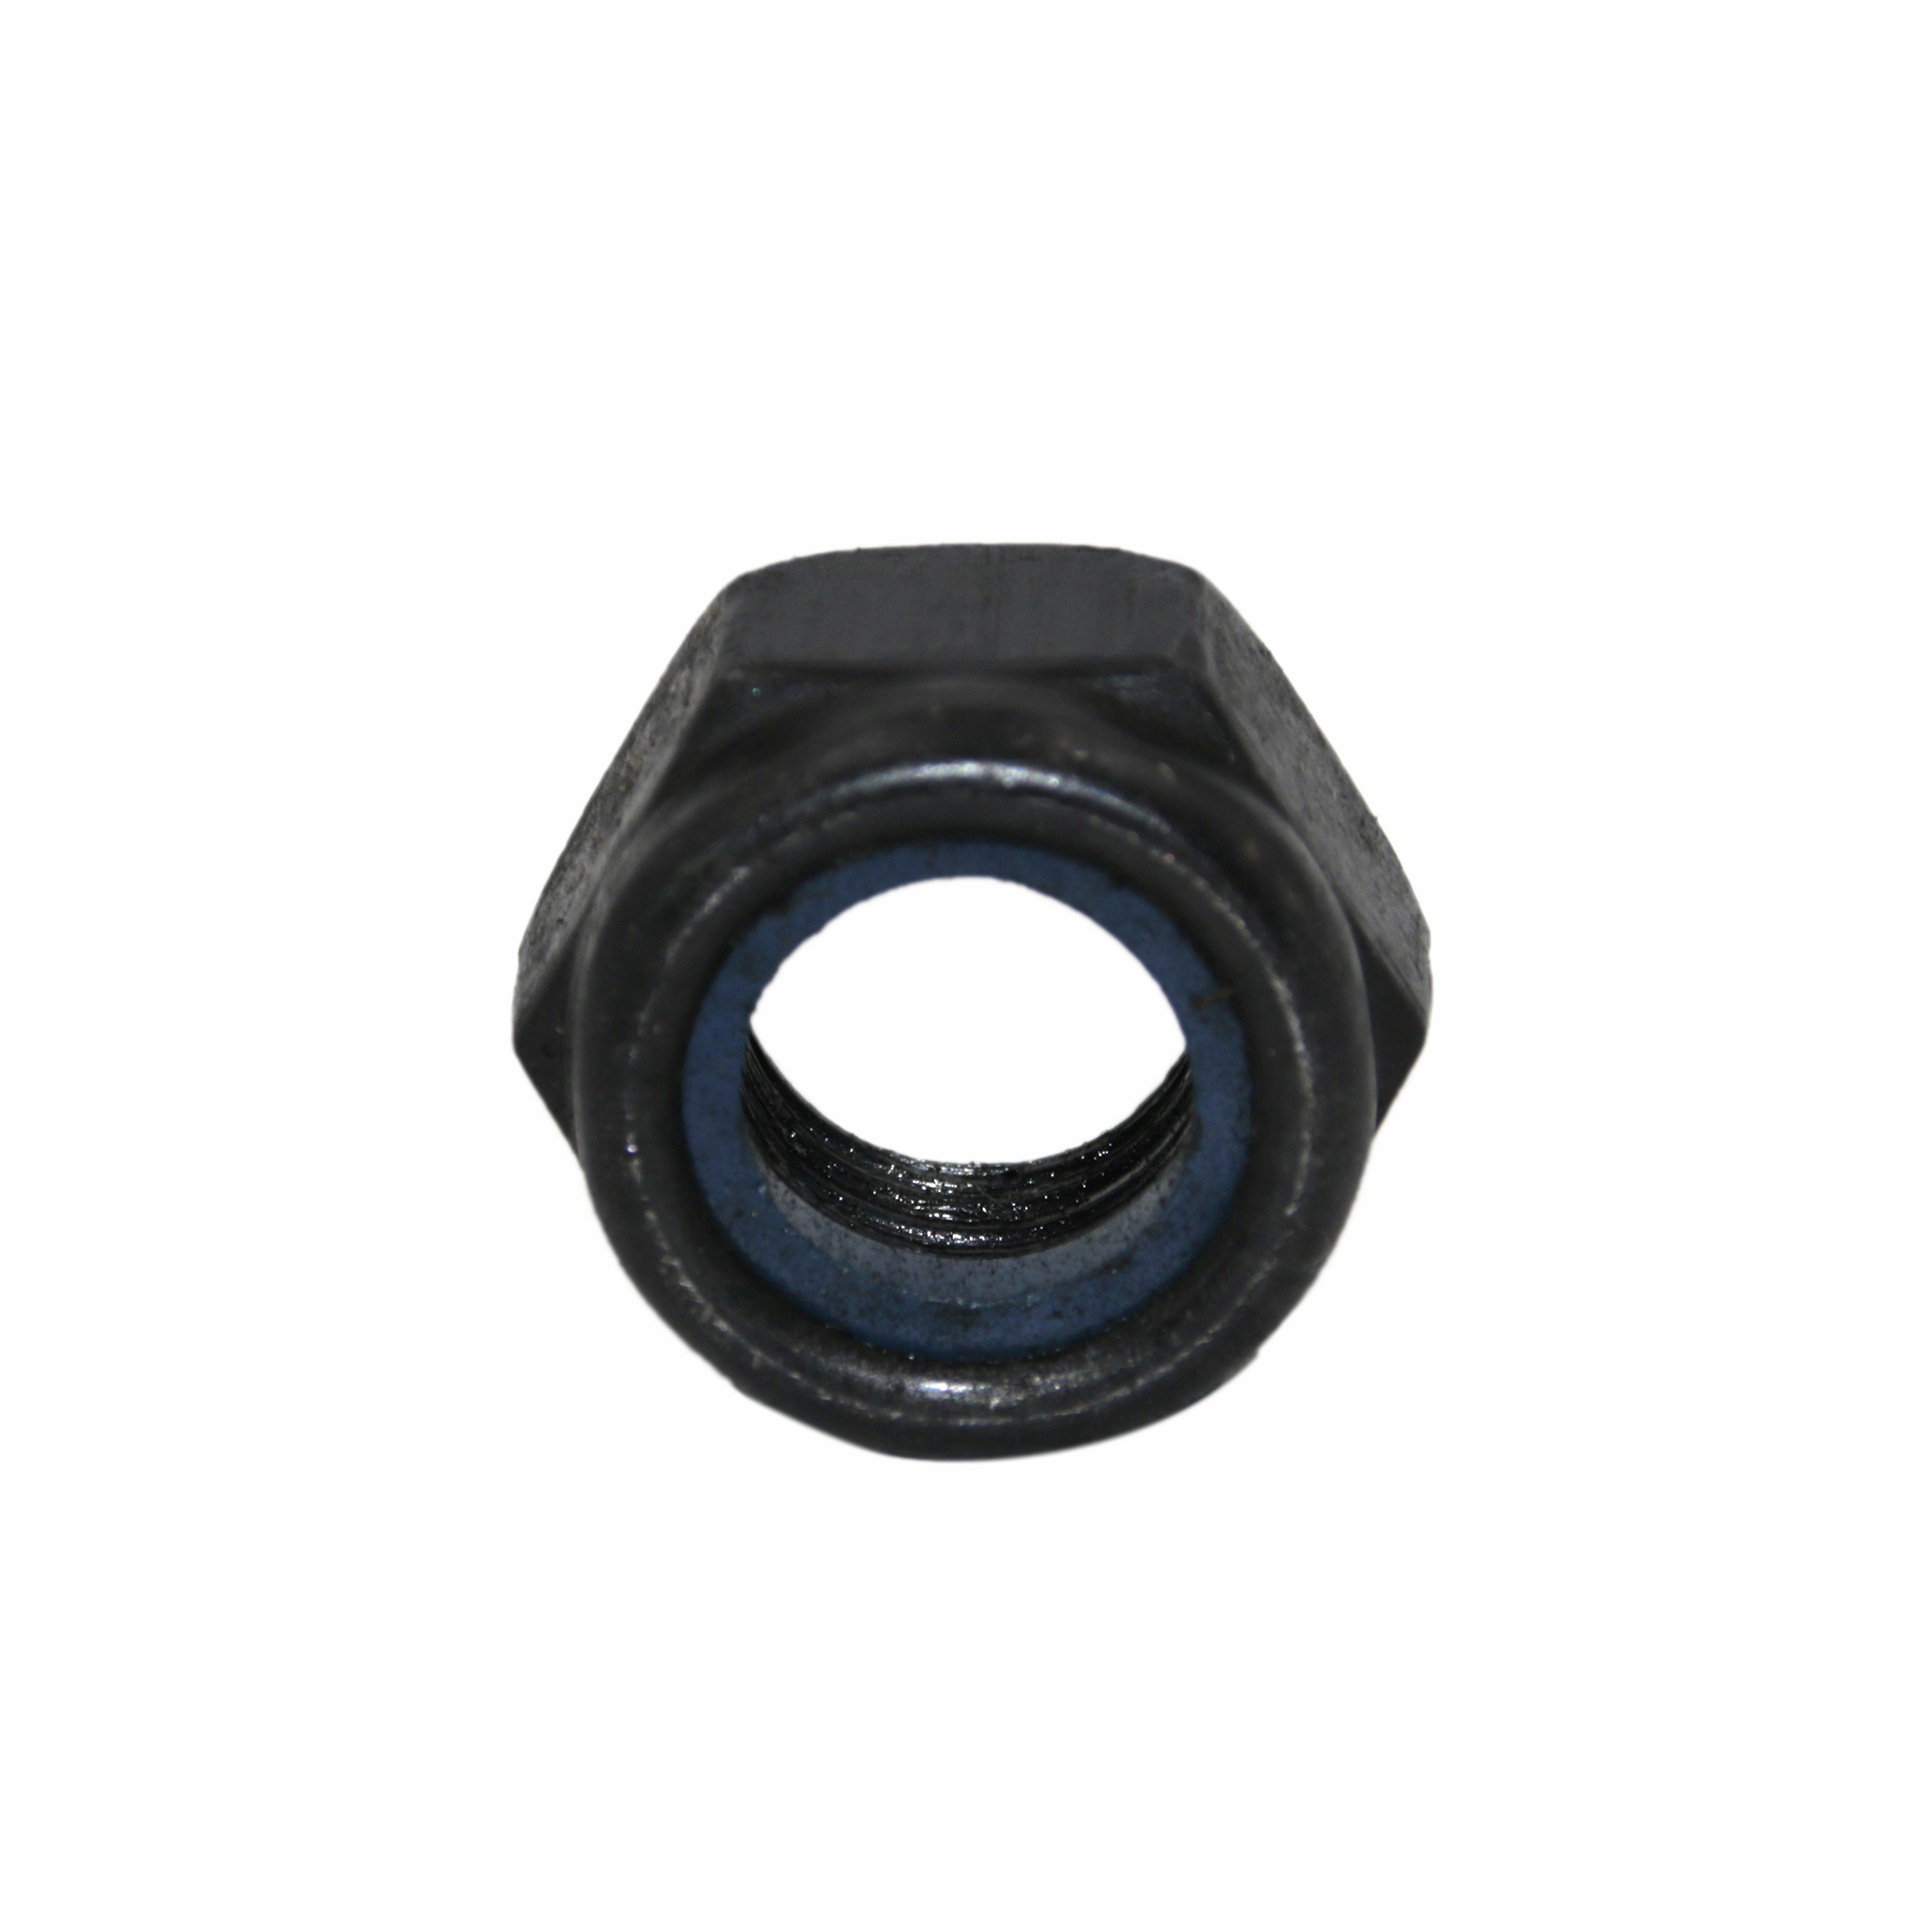 carbon steel nylon lock nut DIN982 with black oxide